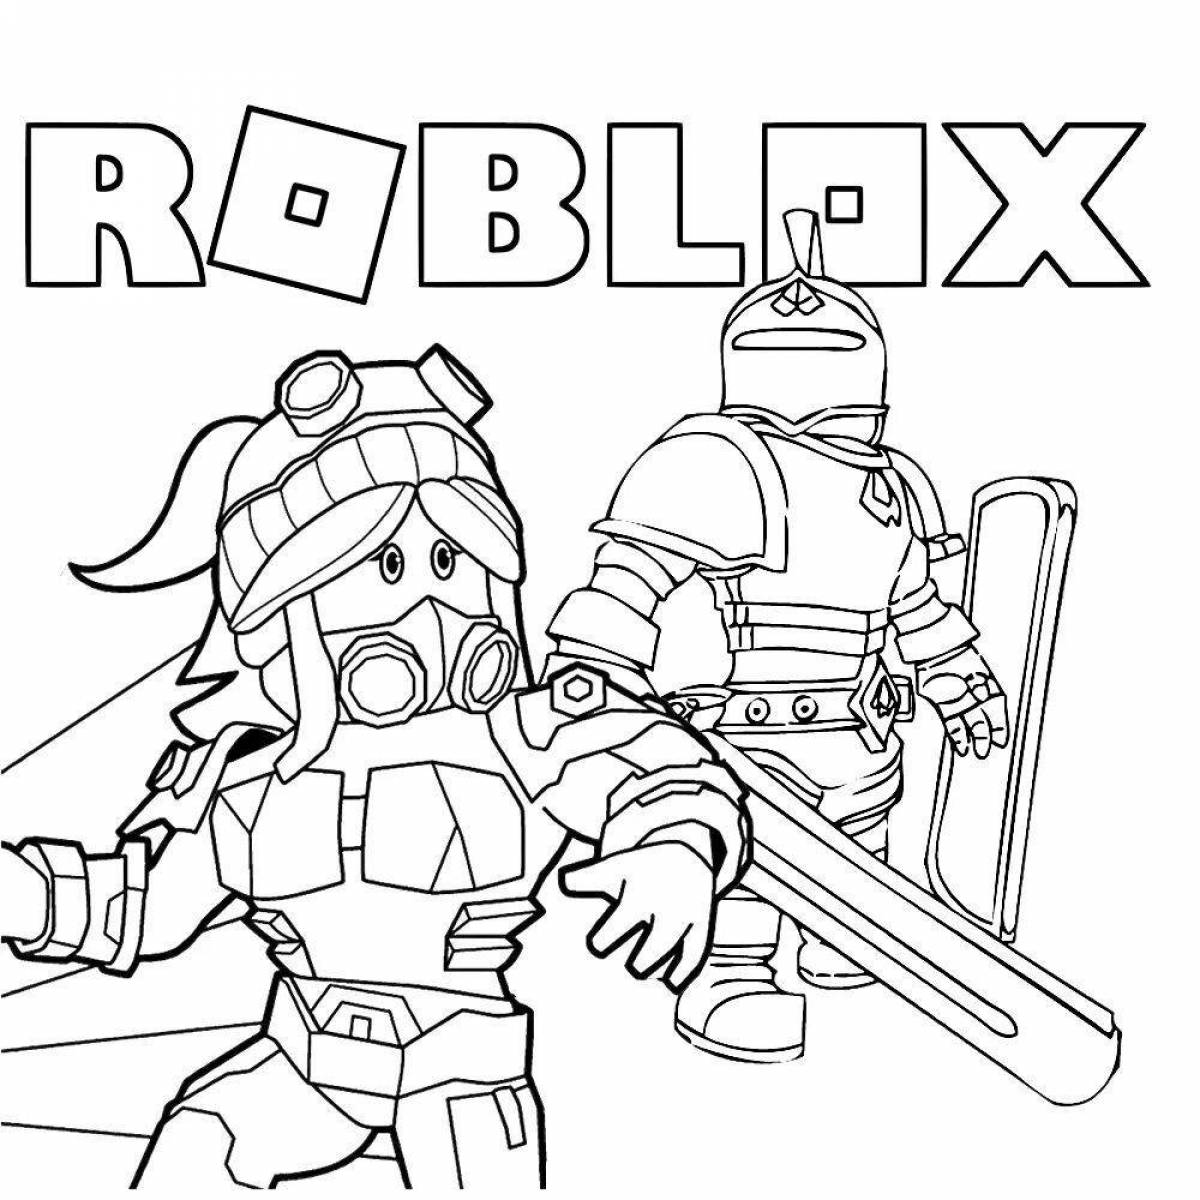 Roblox art fun coloring